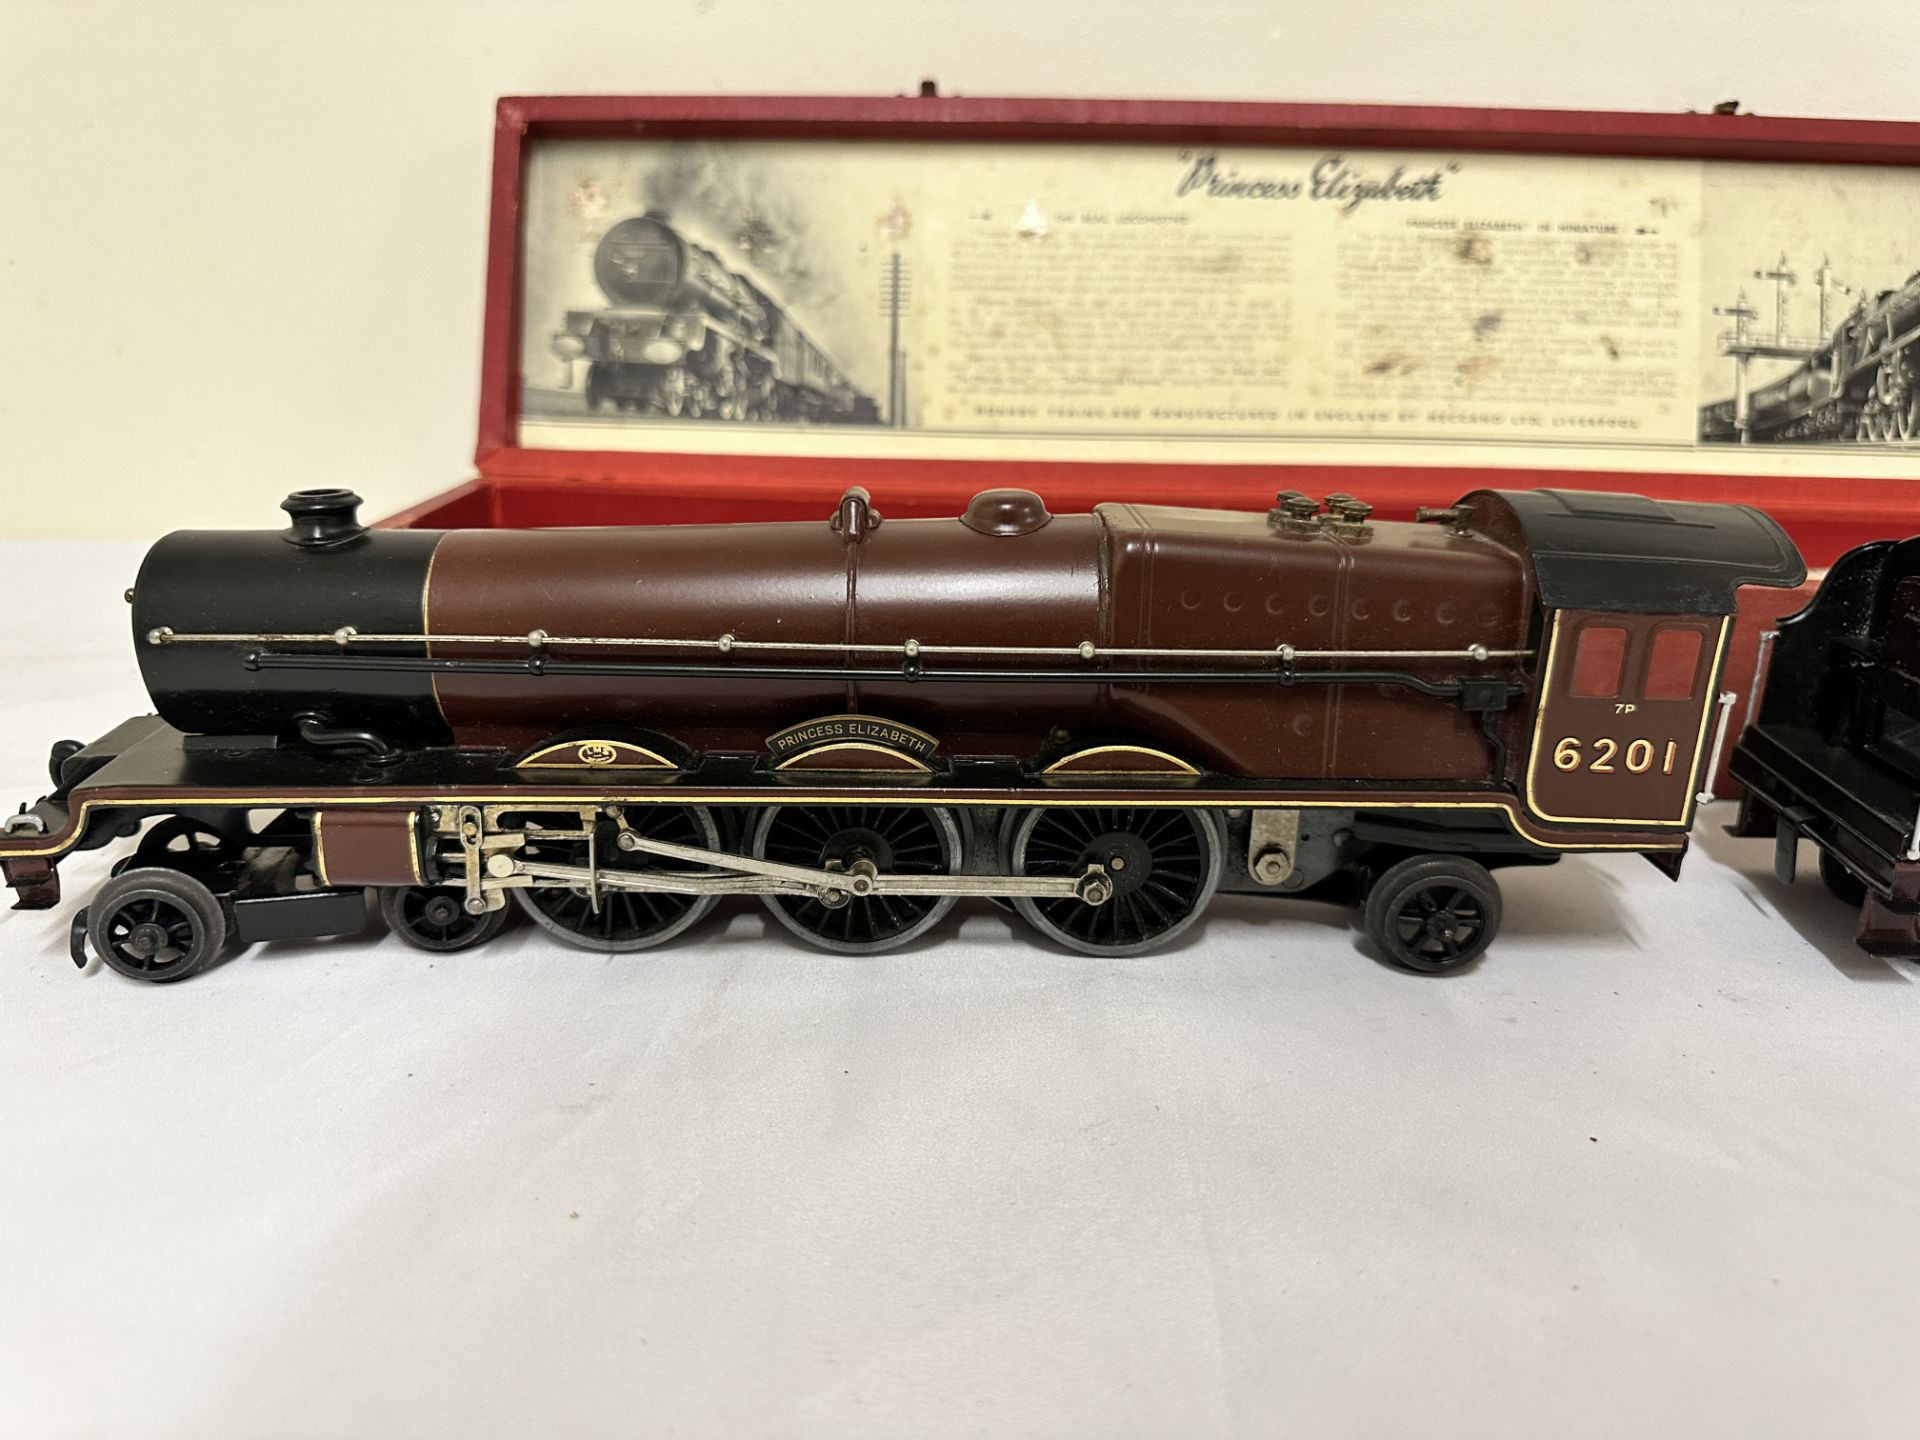 Hornby 0 gauge electric locomotive "The Princess Elizabeth" with tender, in original box. - Image 2 of 3